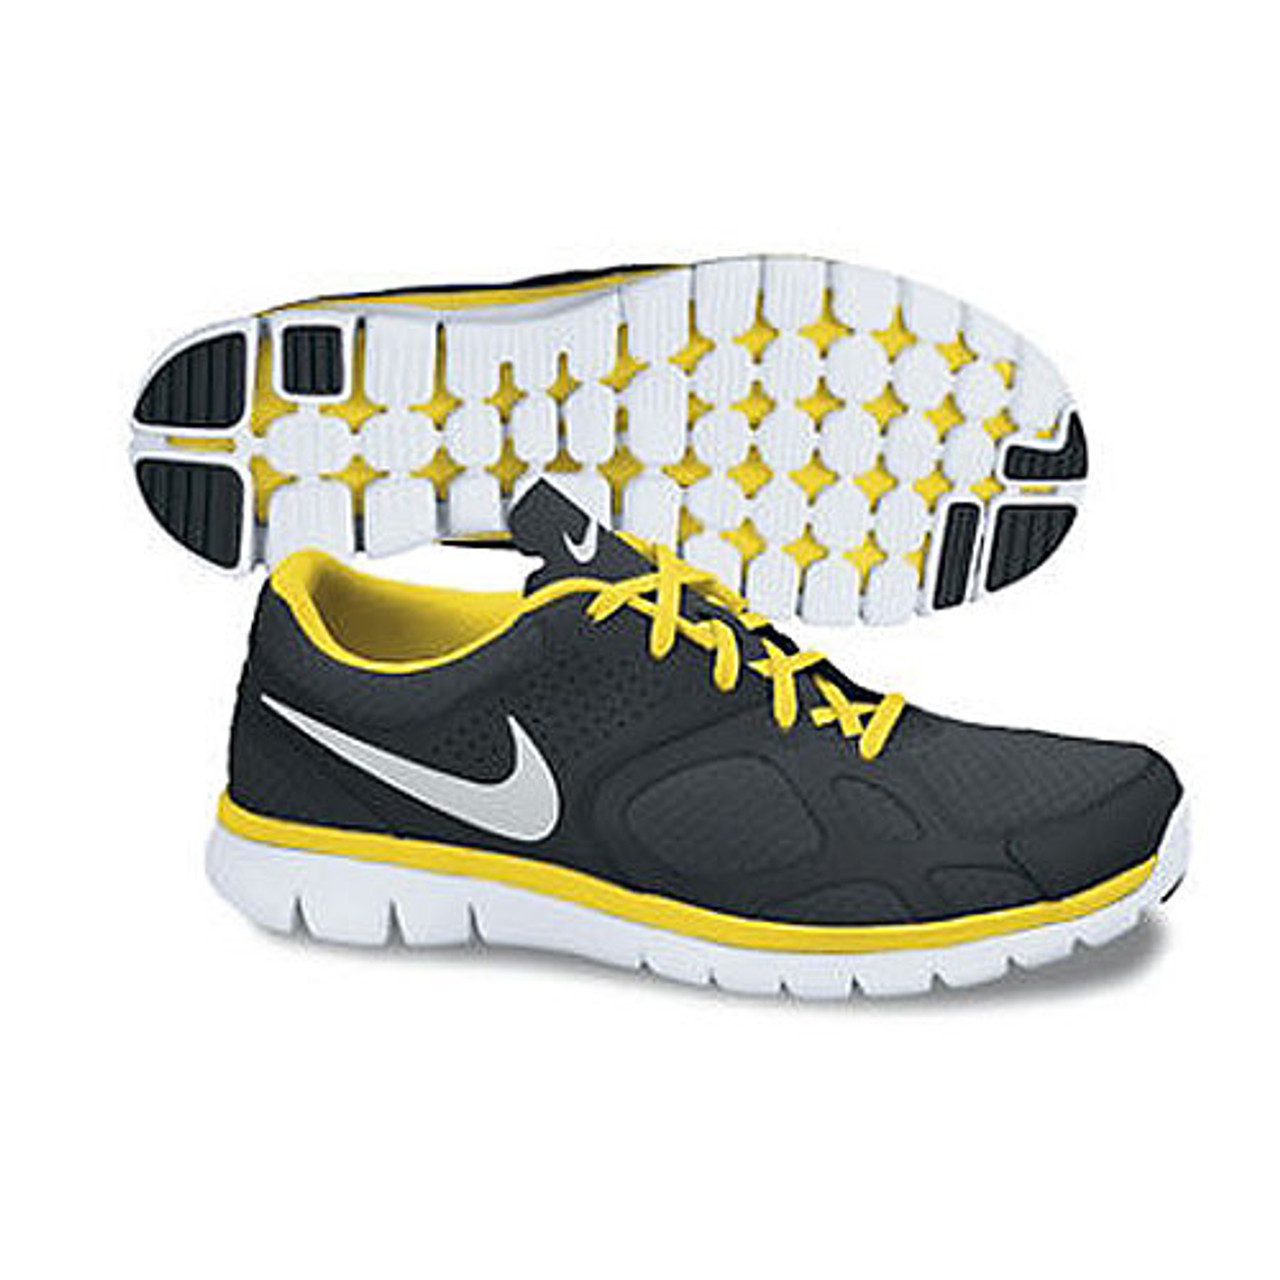 Nike 2012 Run Blk/Yellow - | Discount Nike Men's Athletic & More - Shoolu.com | Shoolu.com